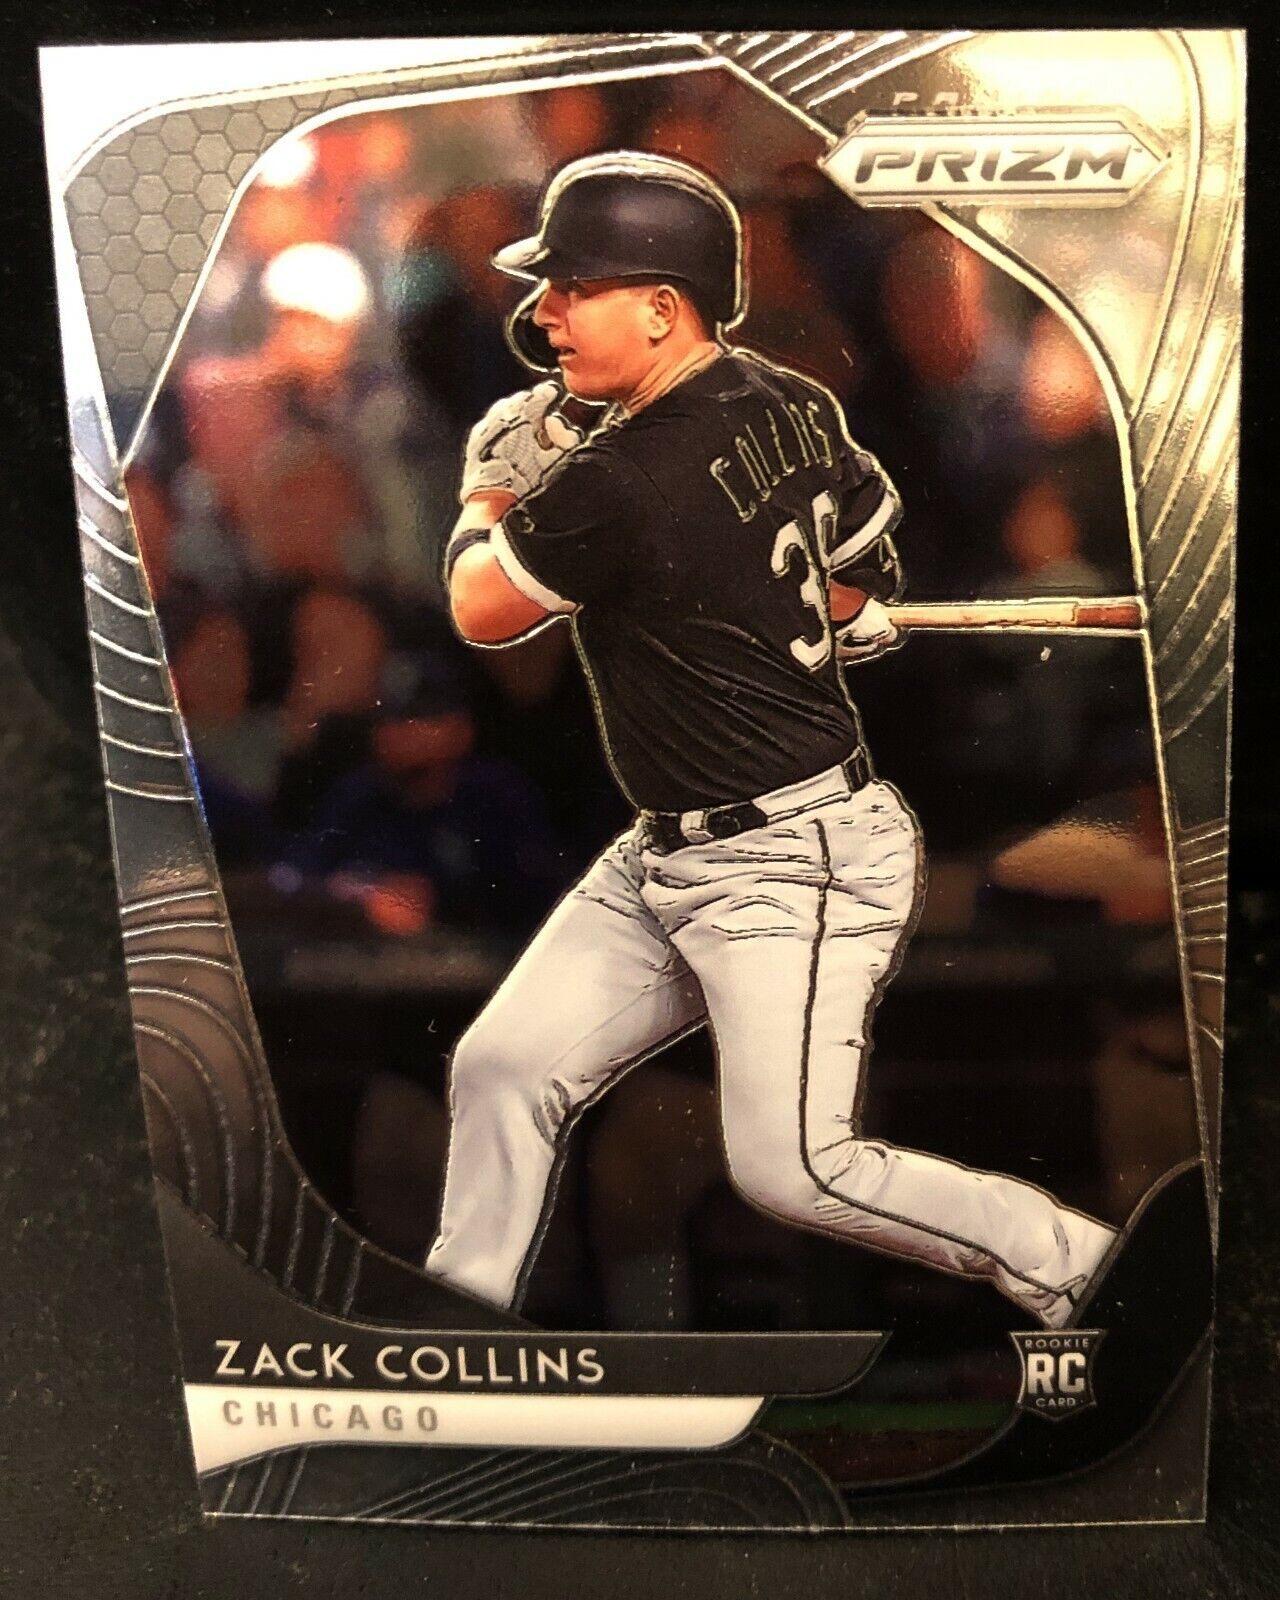 Zack Collins(Chicago White Sox)2020 Panini Prizm Base Rookie Baseball Card